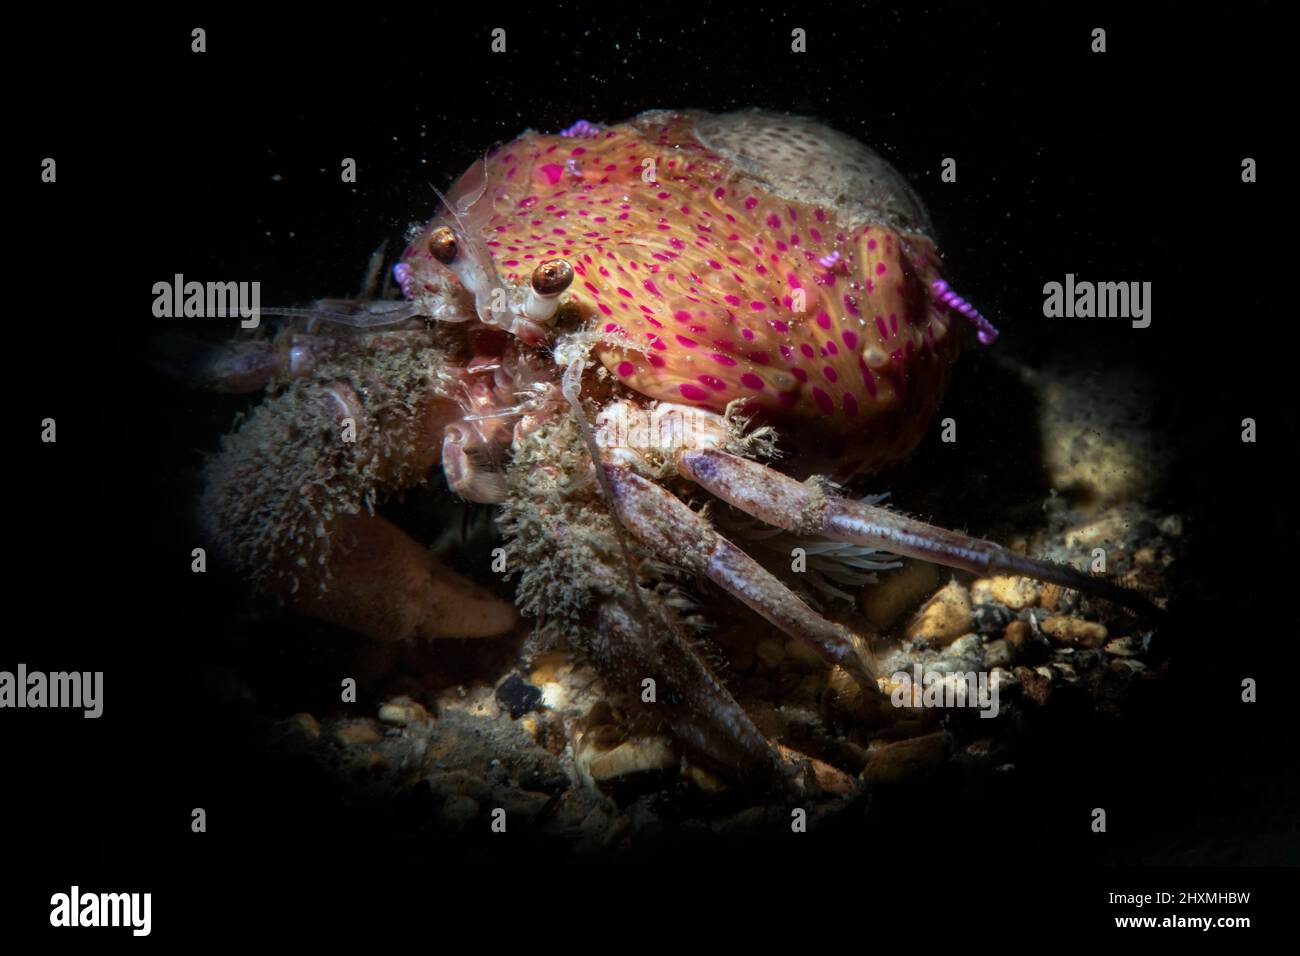 Pagurus prideaux crab living symbiotically with the sea anemone Adamsia palliata, Numana, Italy Stock Photo